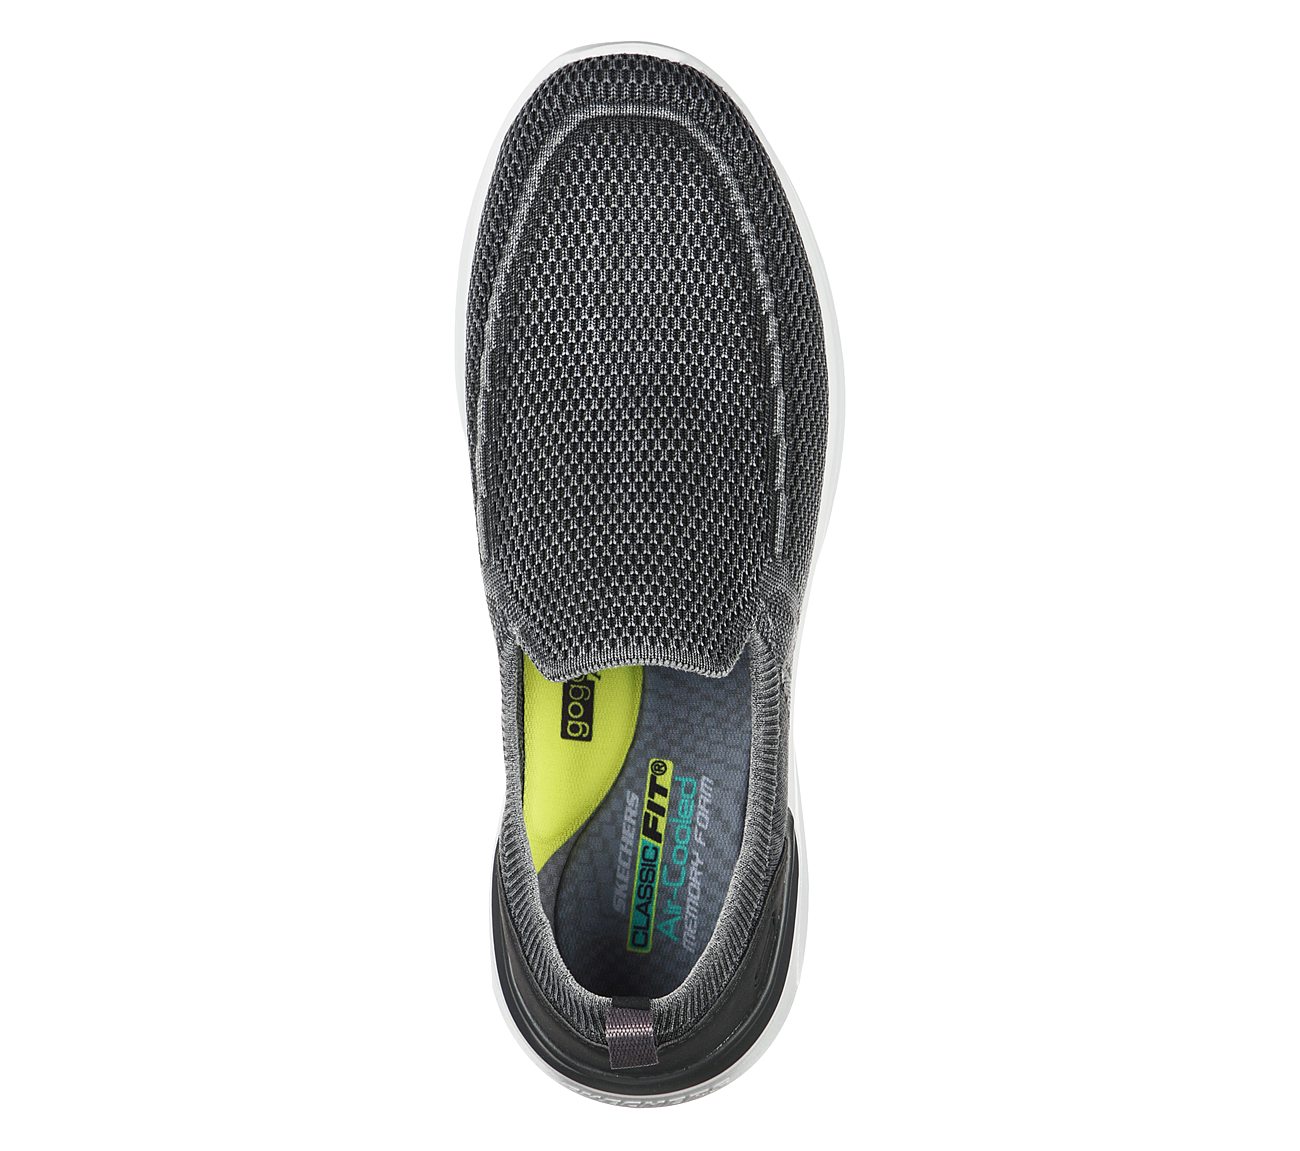 LATTIMORE-WARNER, CCHARCOAL Footwear Top View